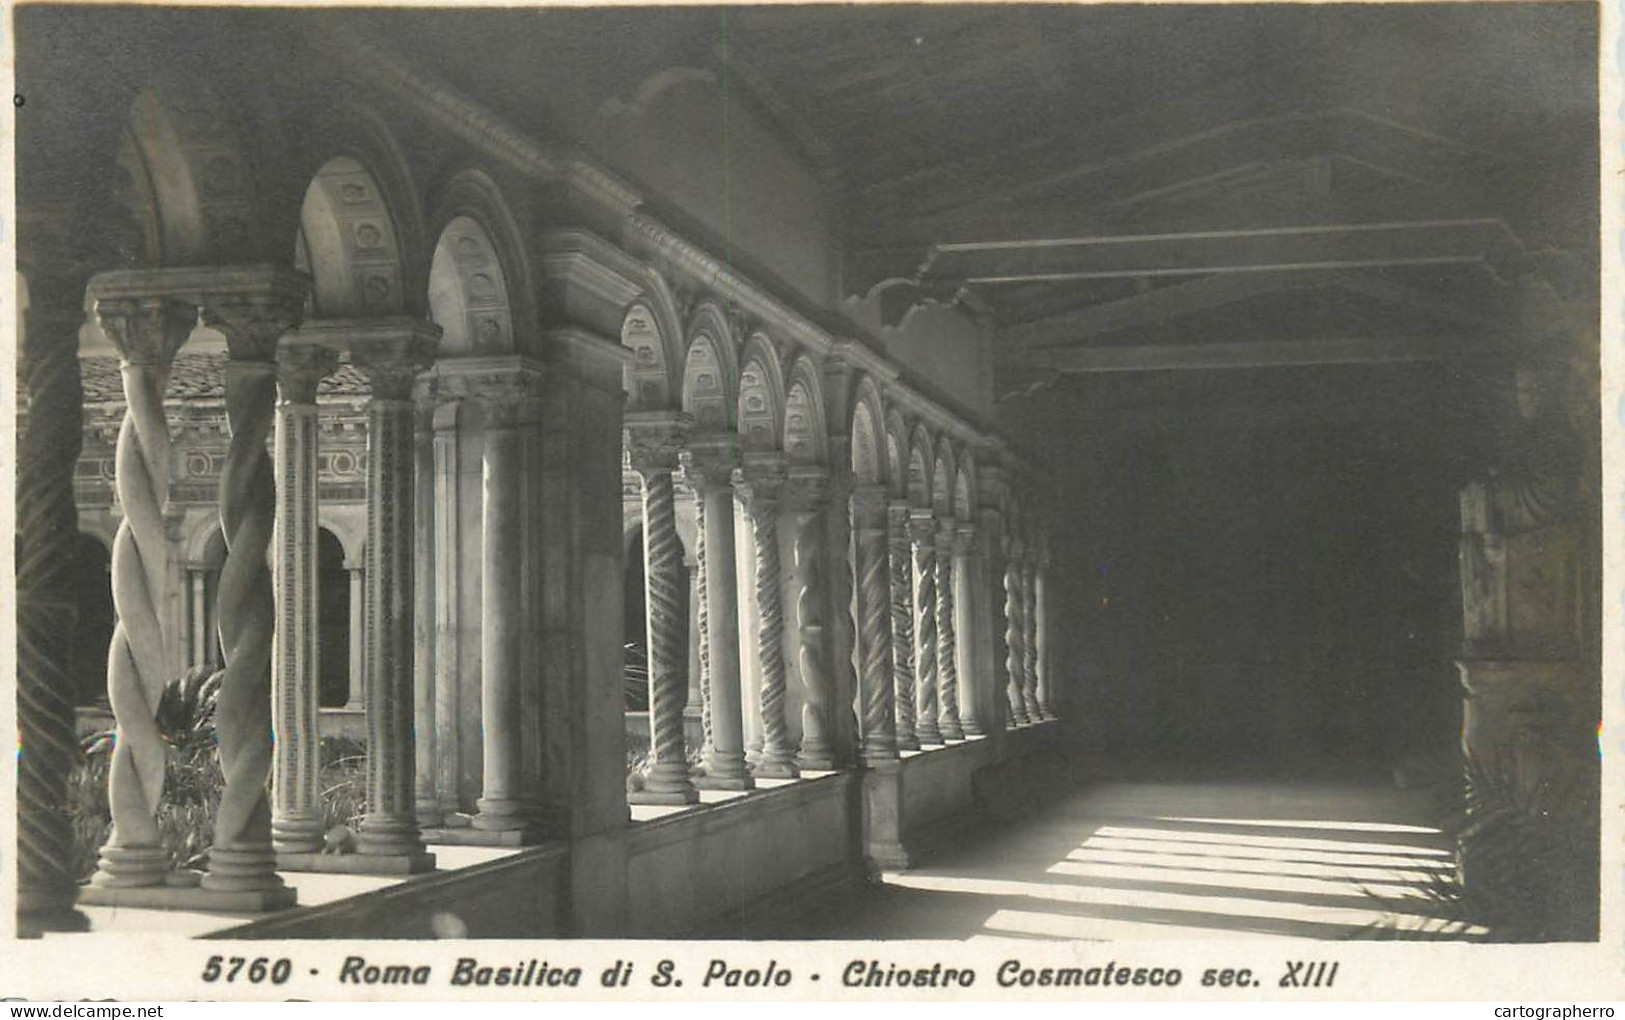 Postcard Italy Rome Basilica S. Paolo Chiostro Cosmatesco - Andere Monumente & Gebäude